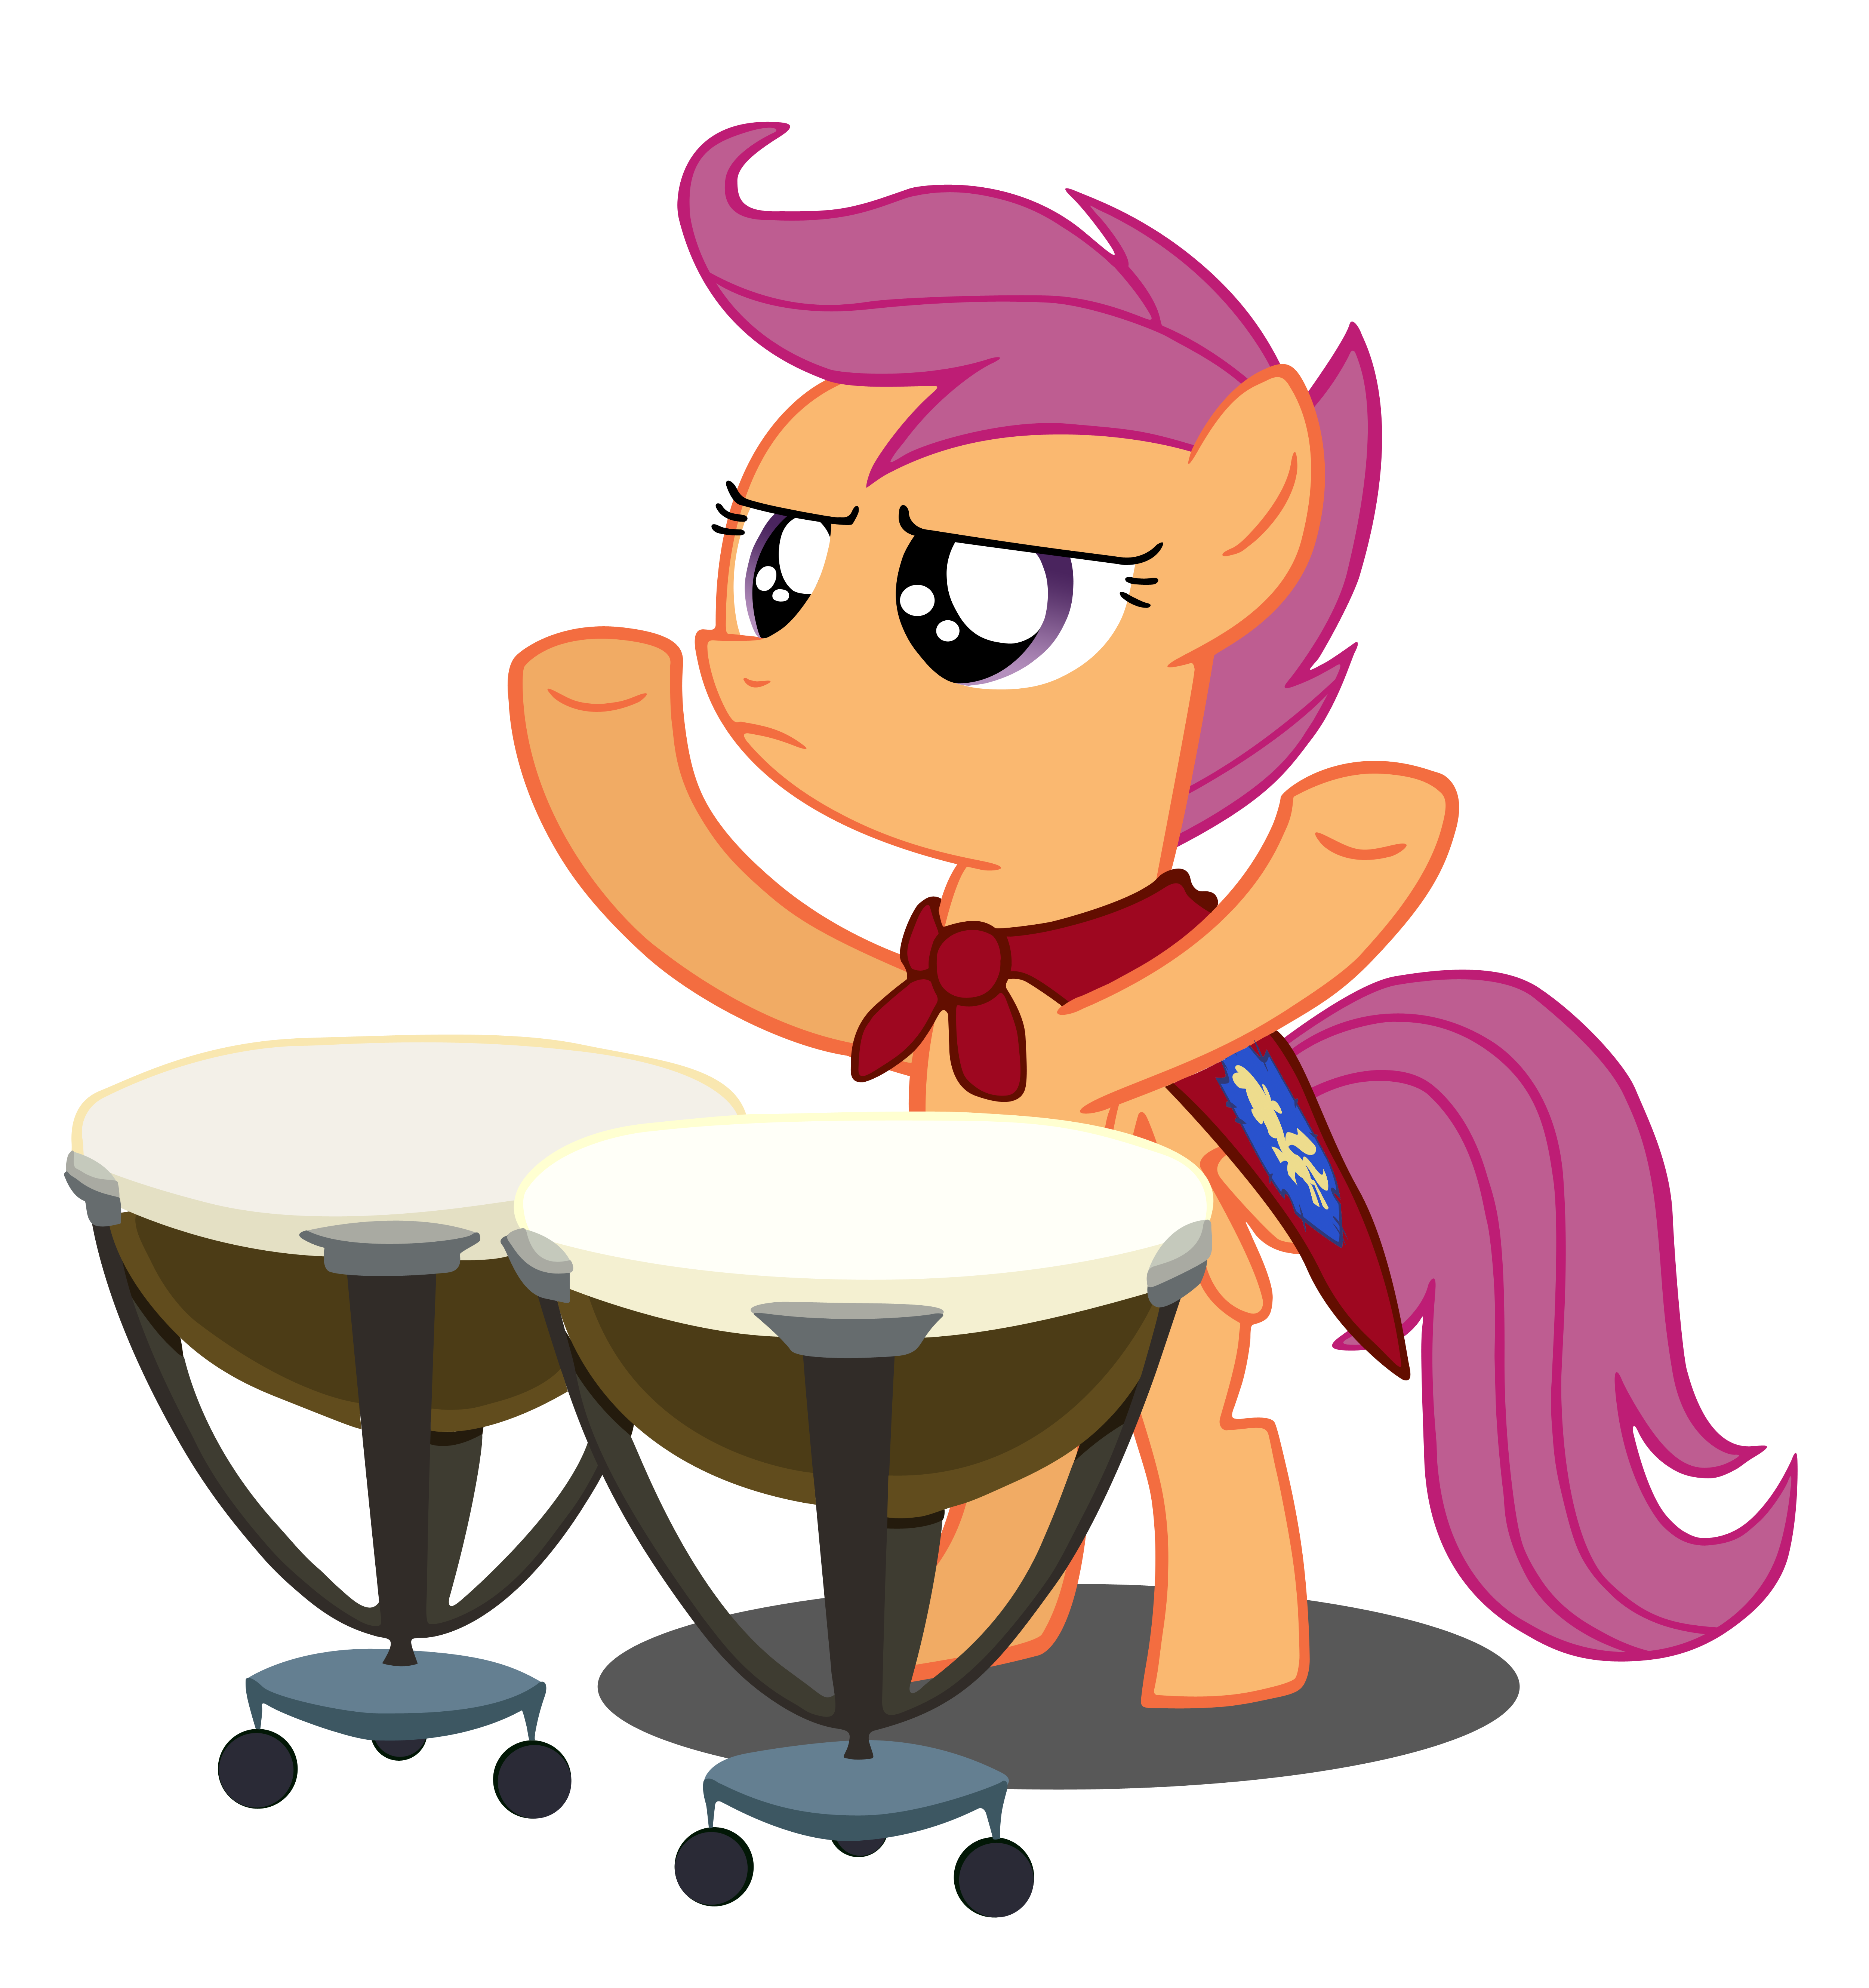 instruments clipart bongo